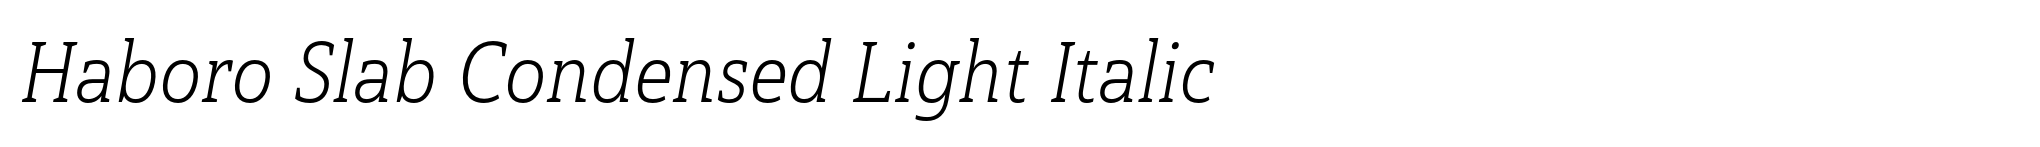 Haboro Slab Condensed Light Italic image